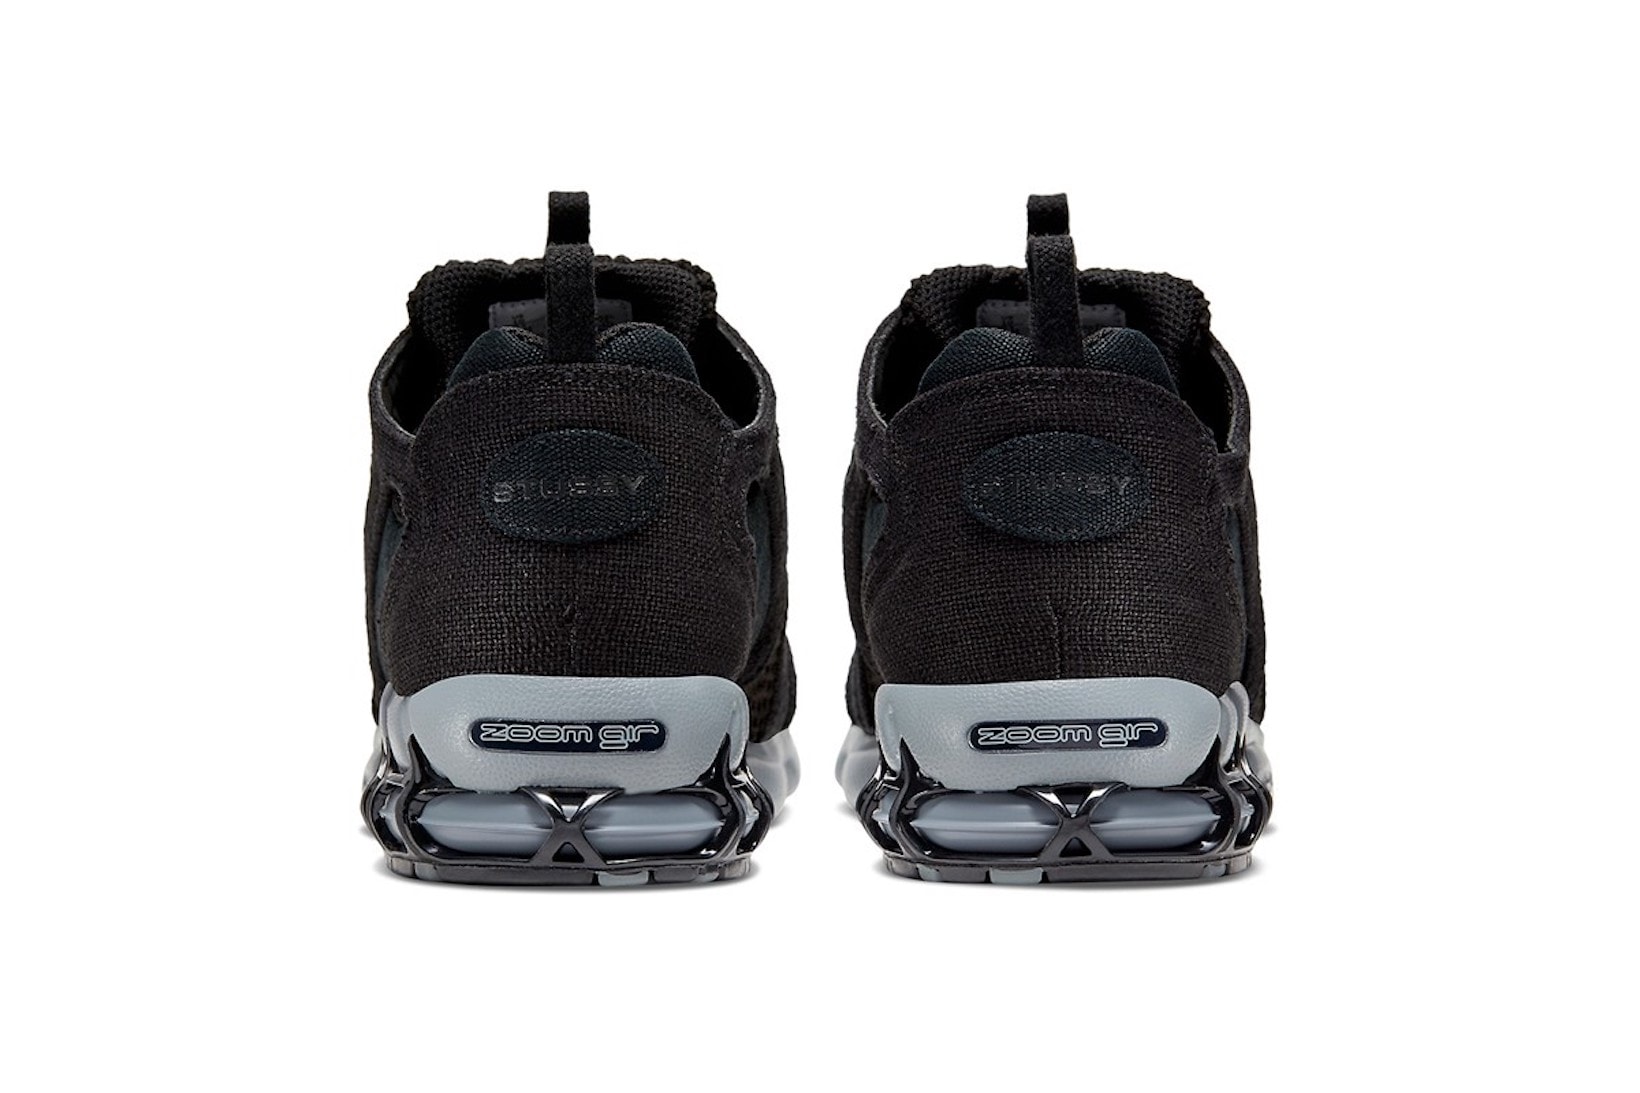 nike stussy air zoom spiridon cage 2 collaboration sneakers black gray sneakerhead footwear shoes